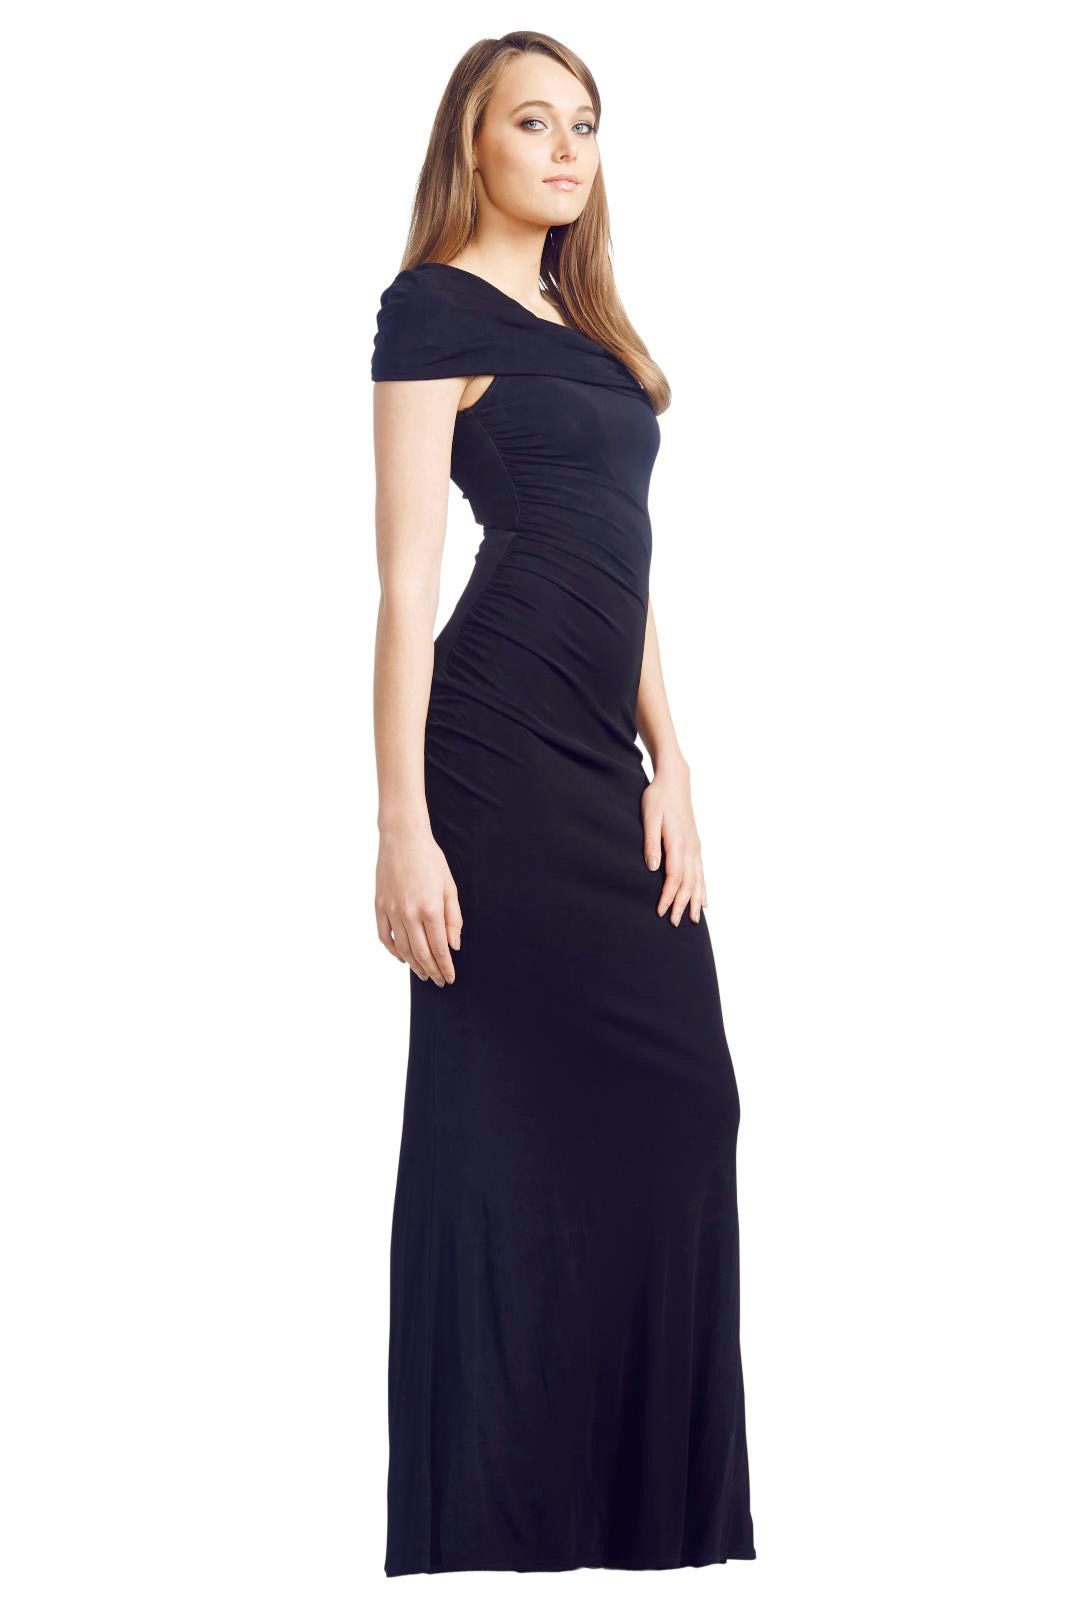 Badgley Mischka - Asymmetric Gown - Black - Side